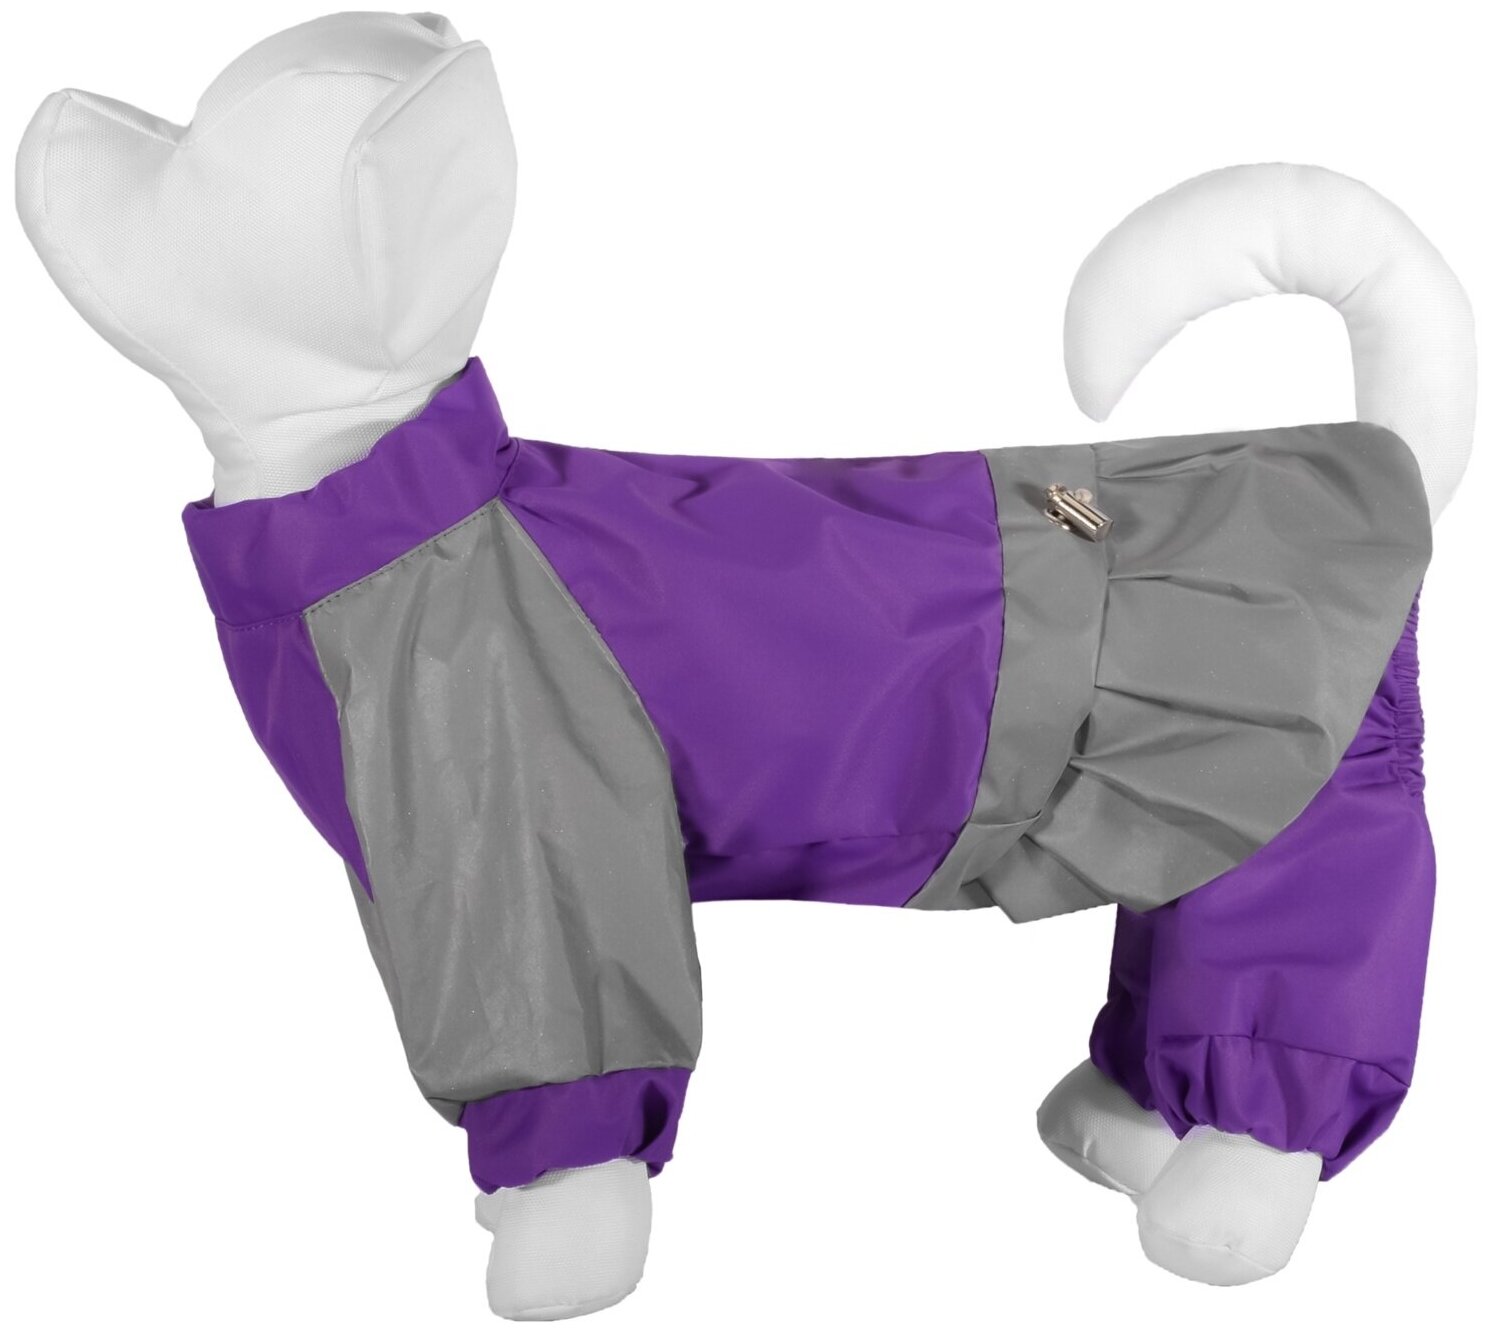 Tappi комбинезон Оллибоди для собак, на девочку, на атласной подкладке, размер L (спинка 35-38 см)